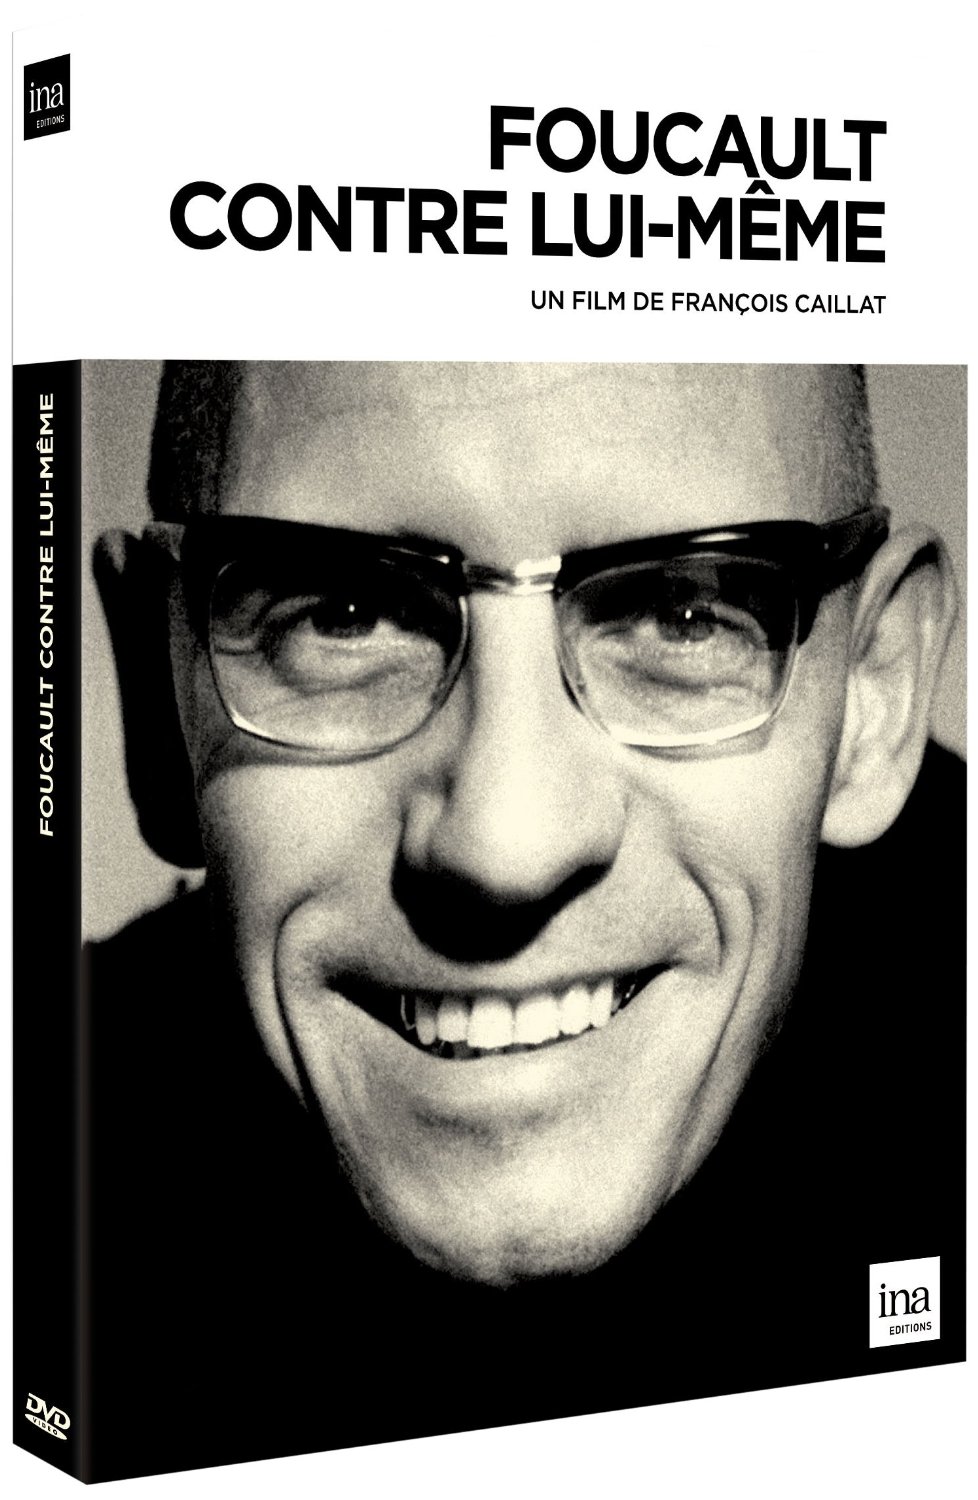 Foucault contre lui même (2014) Screenshot 1 